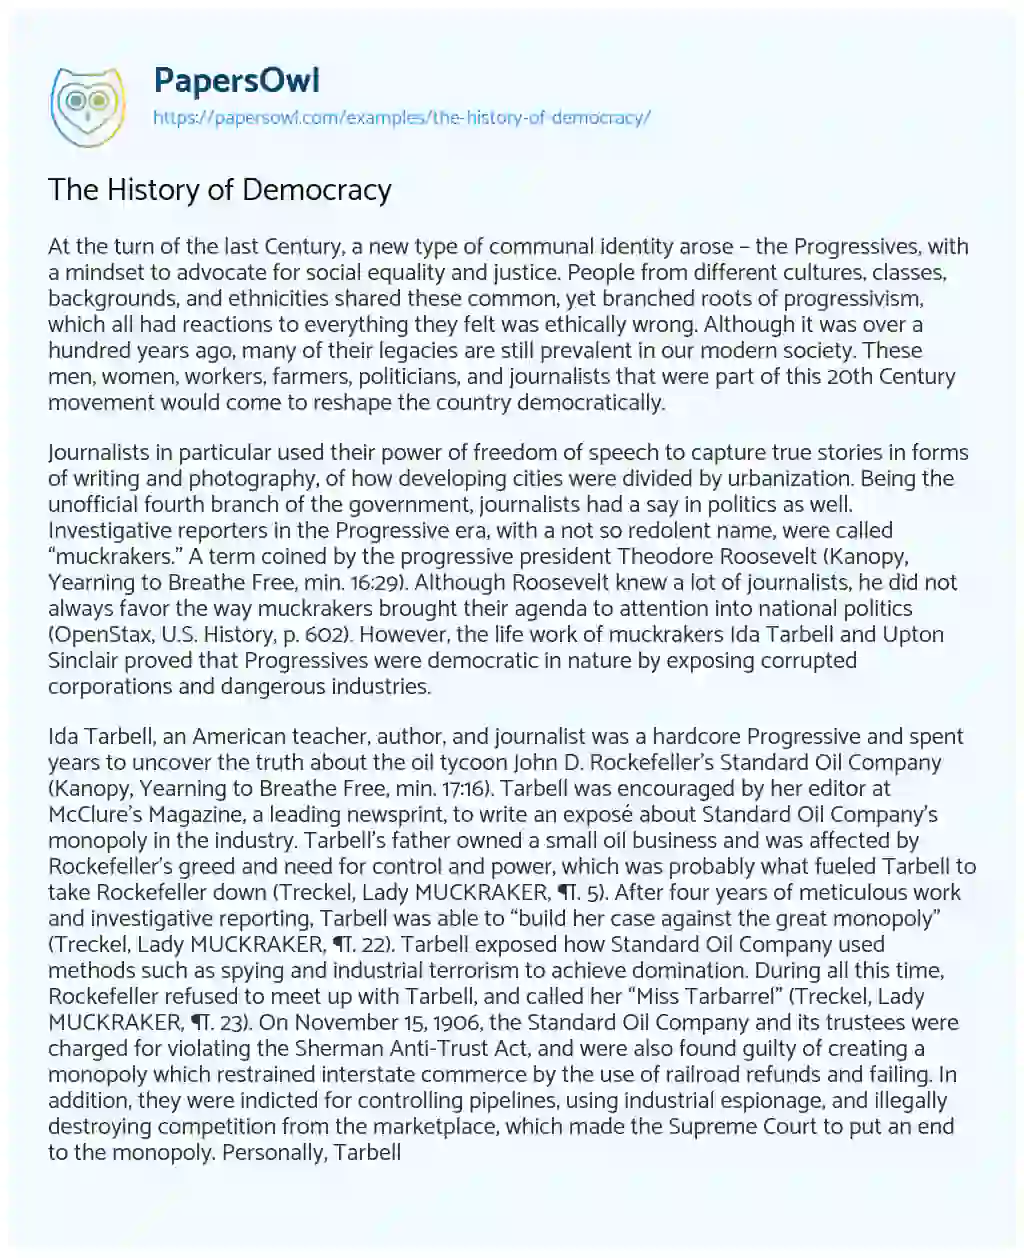 Essay on The History of Democracy